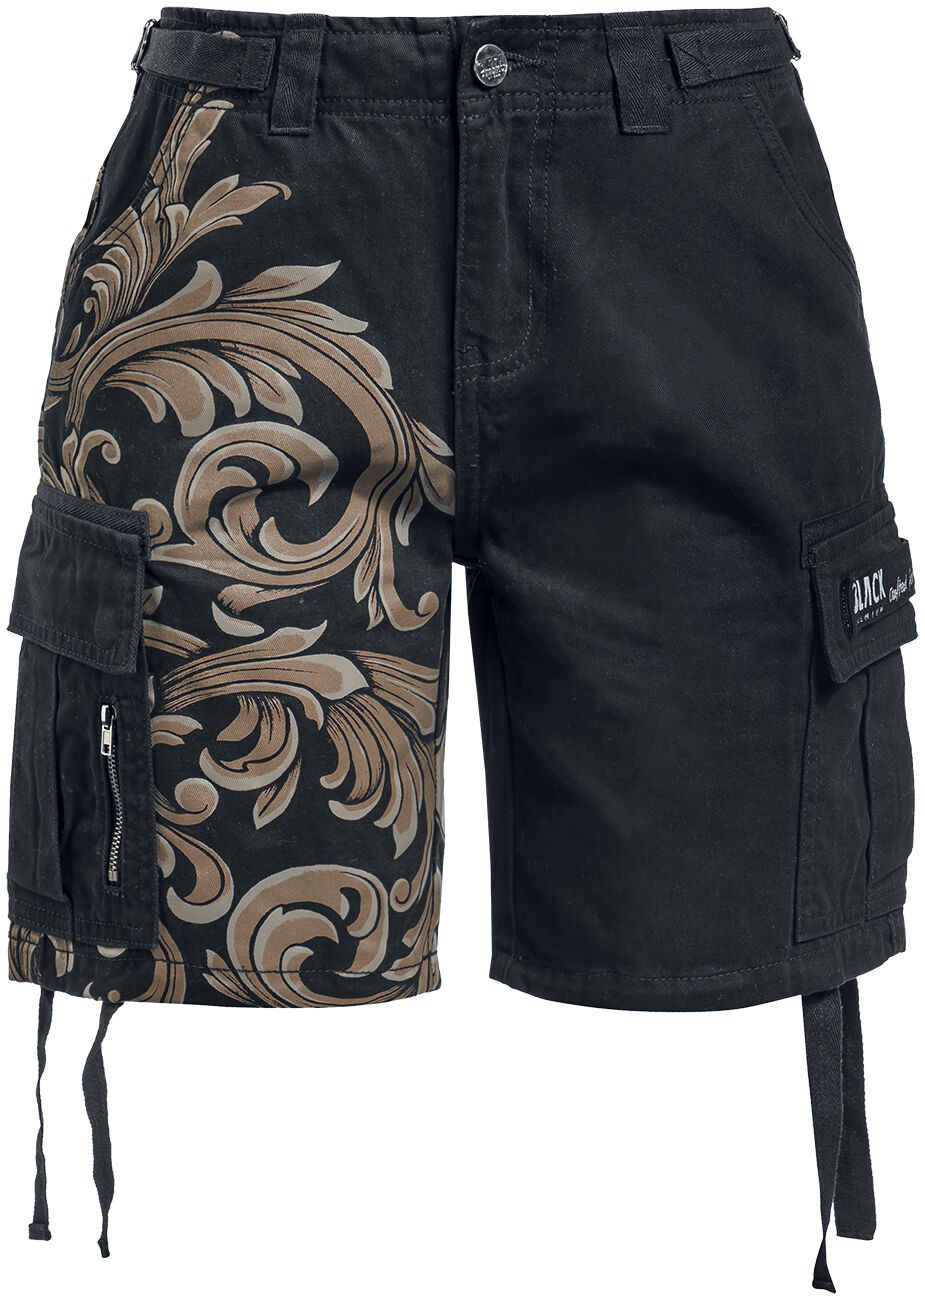 Black Premium by EMP - Shorts with ornaments - Short - schwarz - EMP Exklusiv!